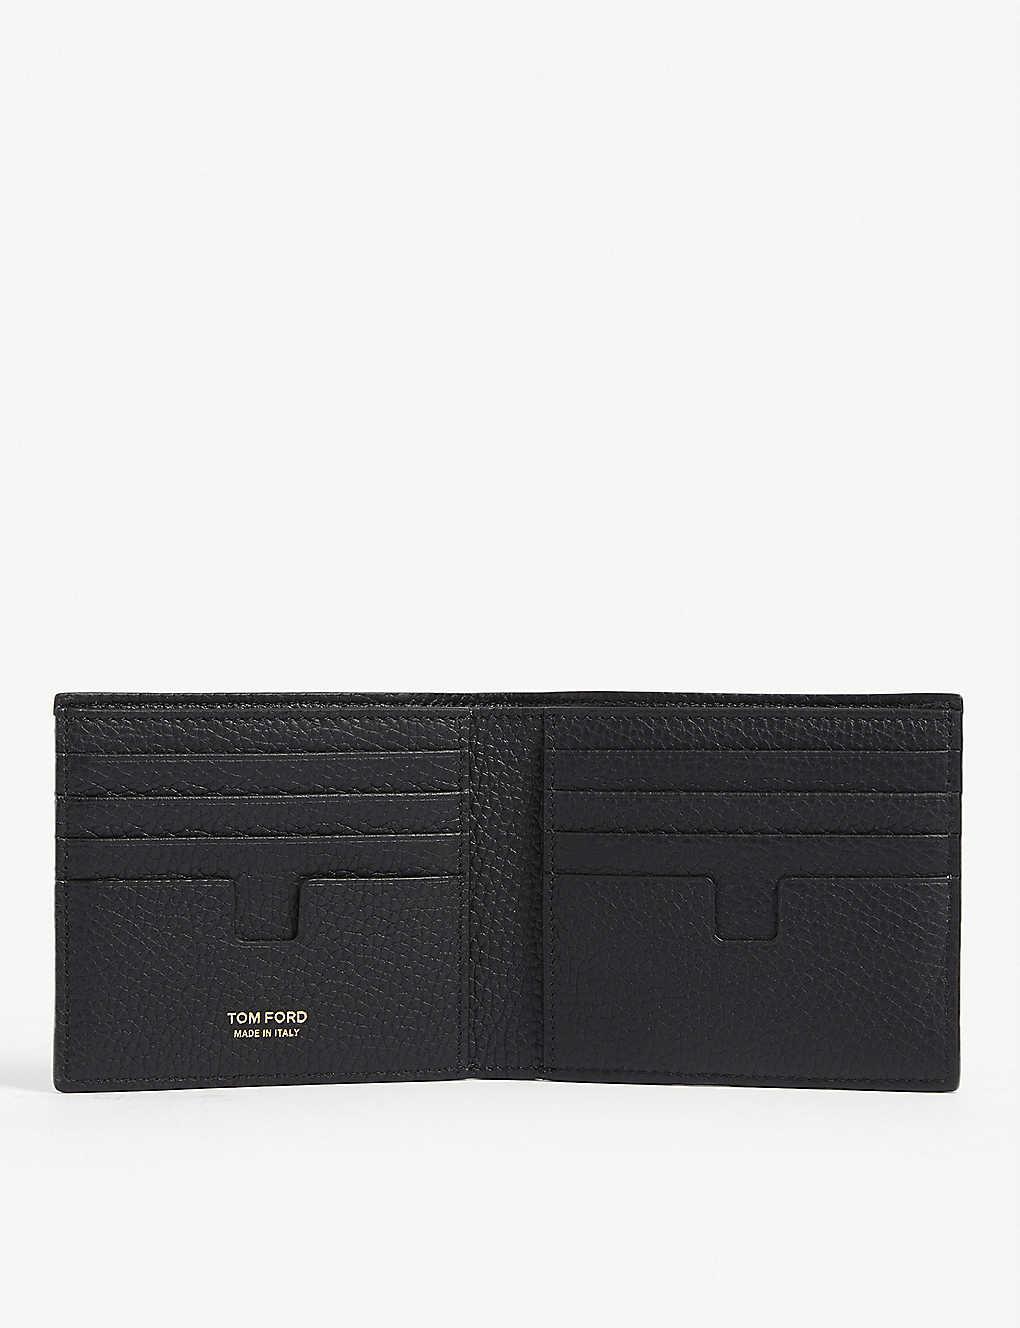 Tom Ford Leather Bifold Wallet in Black for Men - Lyst